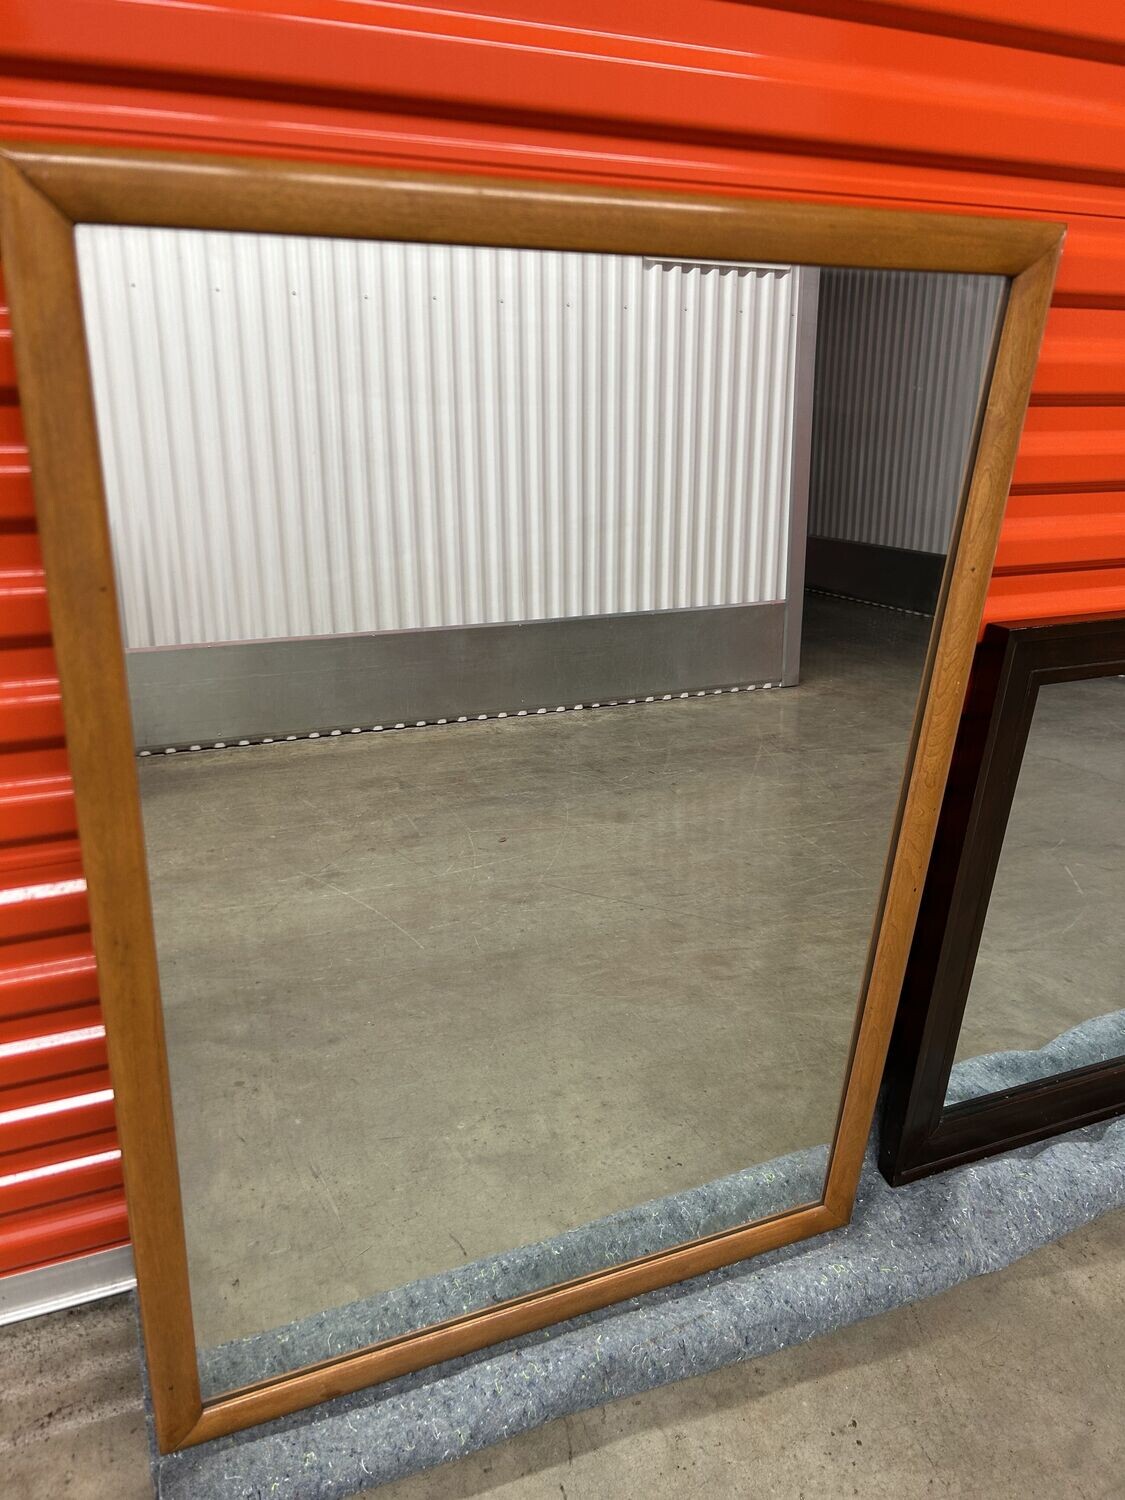 Mirror, 30x42, med. brown frame #2314 ** 6 wks. to sell, full price